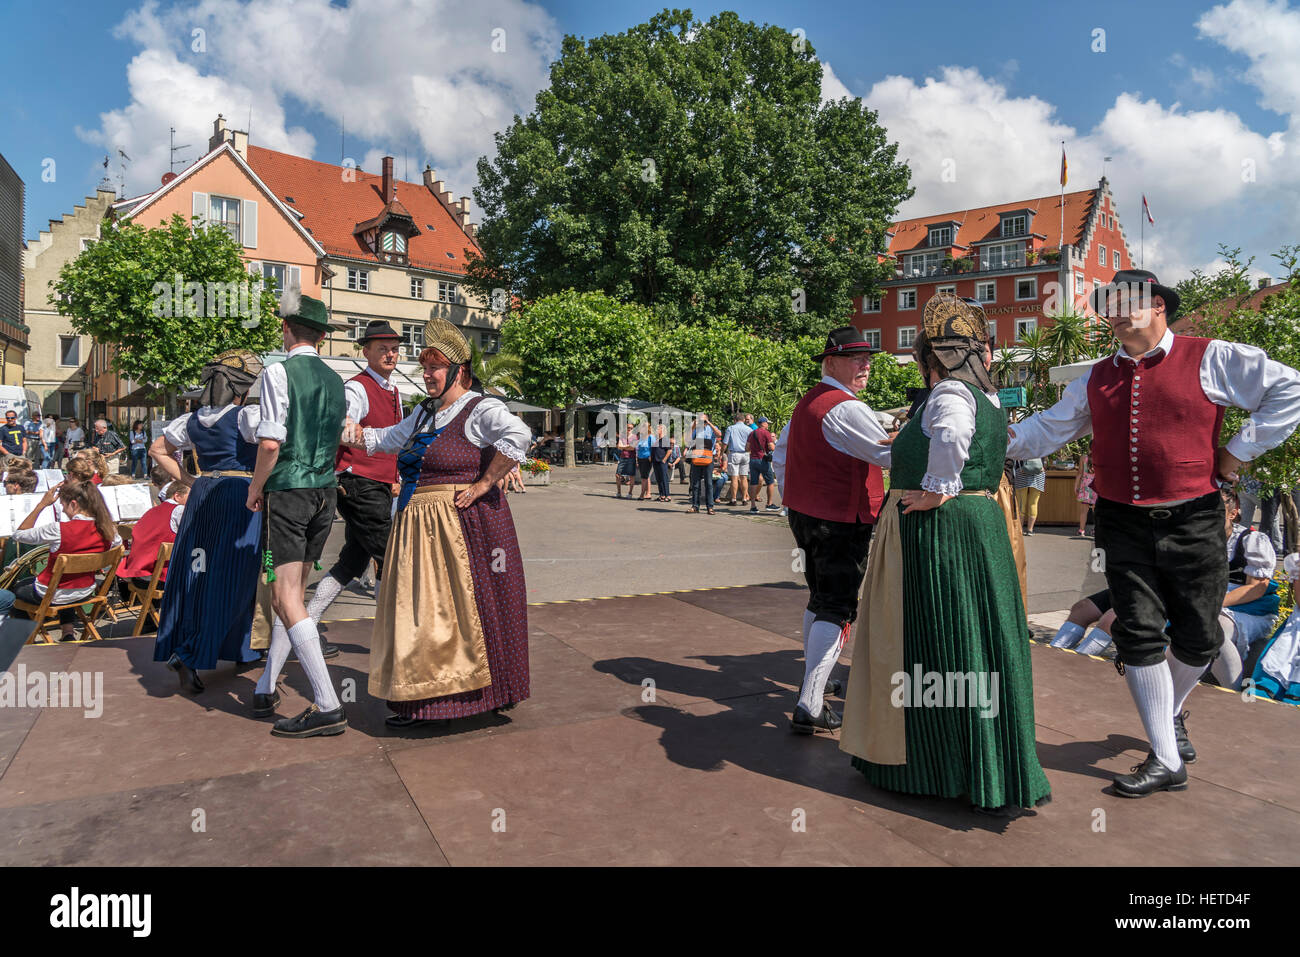 Folk dance group dancing in traditional costumes, Lindau, Lake Constance, Bavaria, Germany, Europe Stock Photo